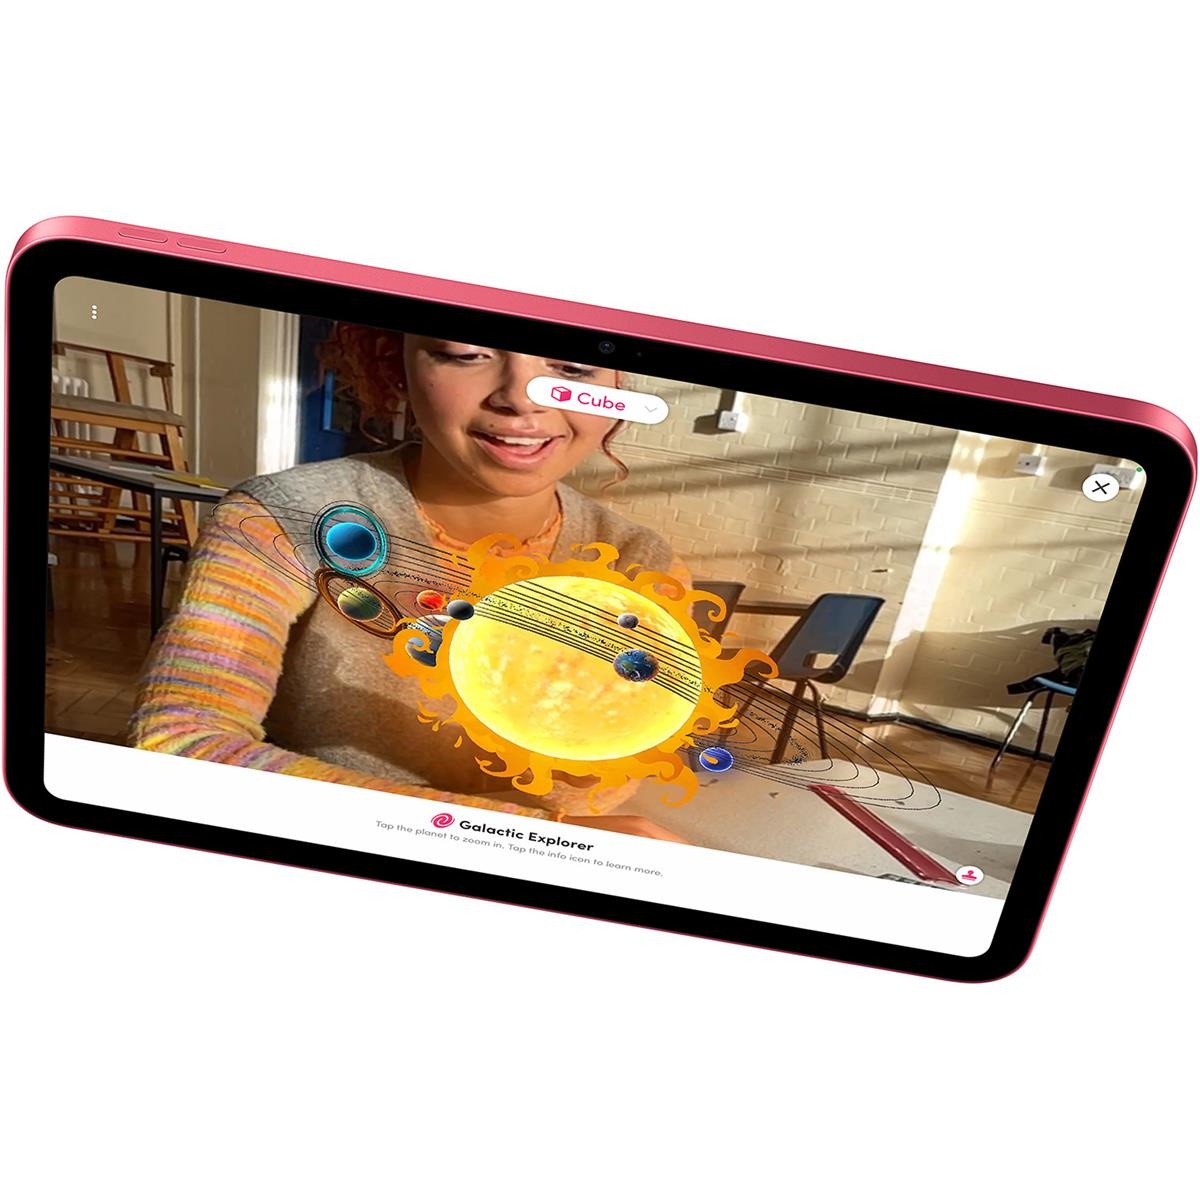 Apple iPad 10th Gen (Wifi + Cellular) (Unlocked) - 256GB - Pink (Certified Refurbished)